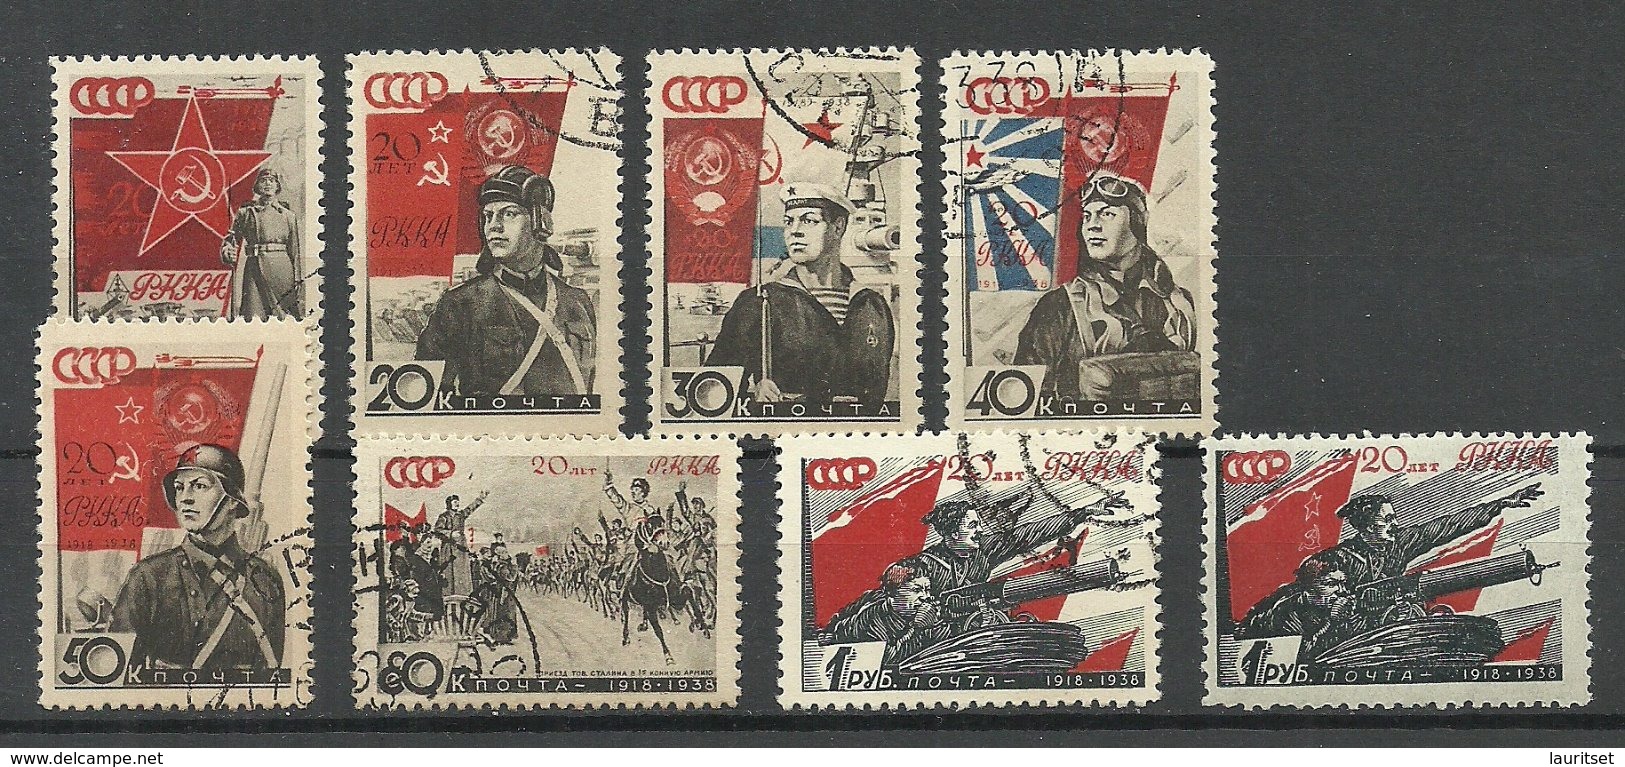 RUSSLAND RUSSIA 1938 Michel 588 - 594 O + Michel 594 Thin Paper Type MNH - Gebruikt